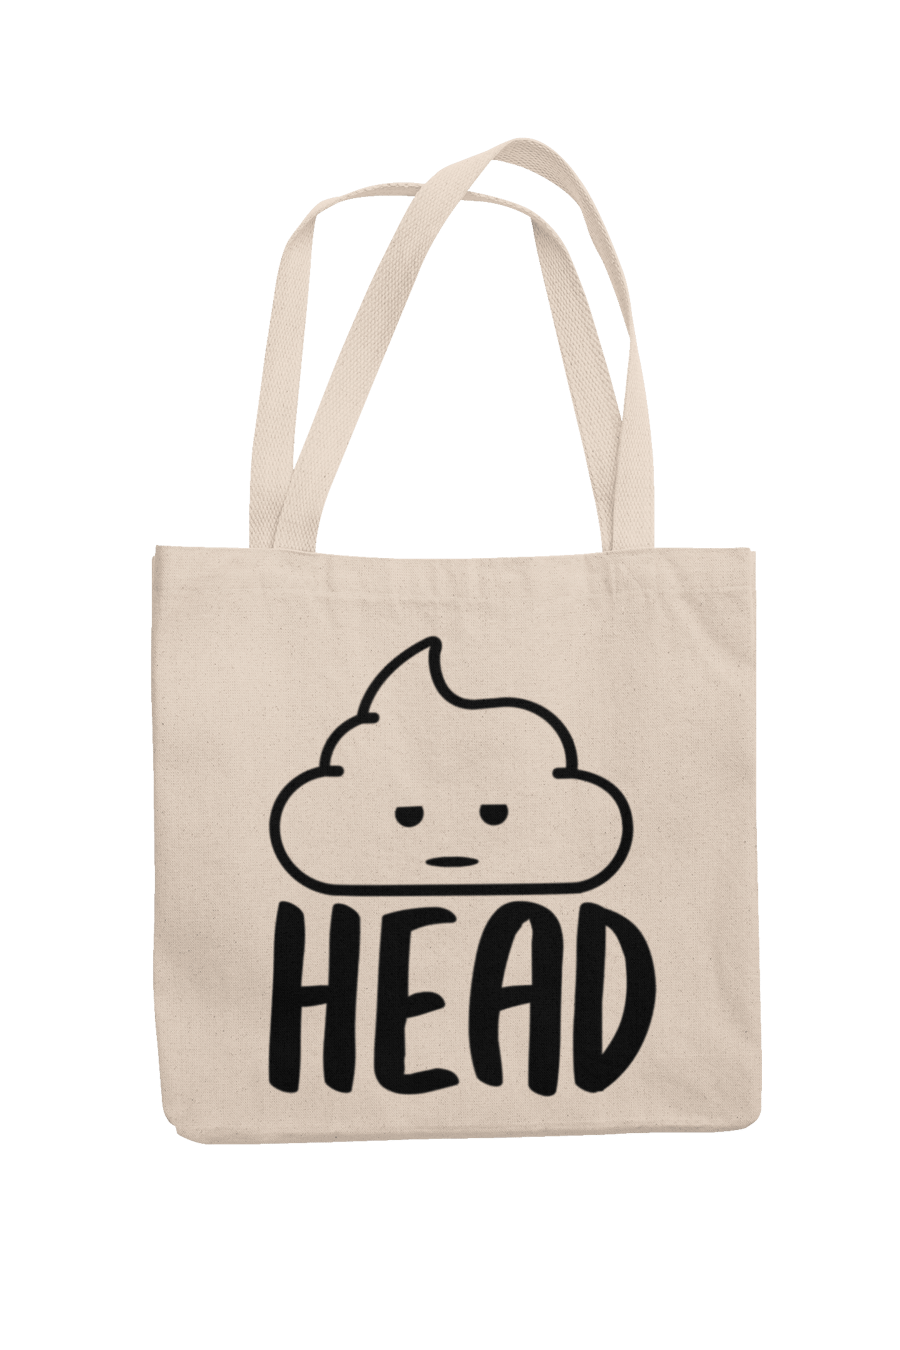 Sh.t (Poo) Head - Funny Novelty Tote Bag